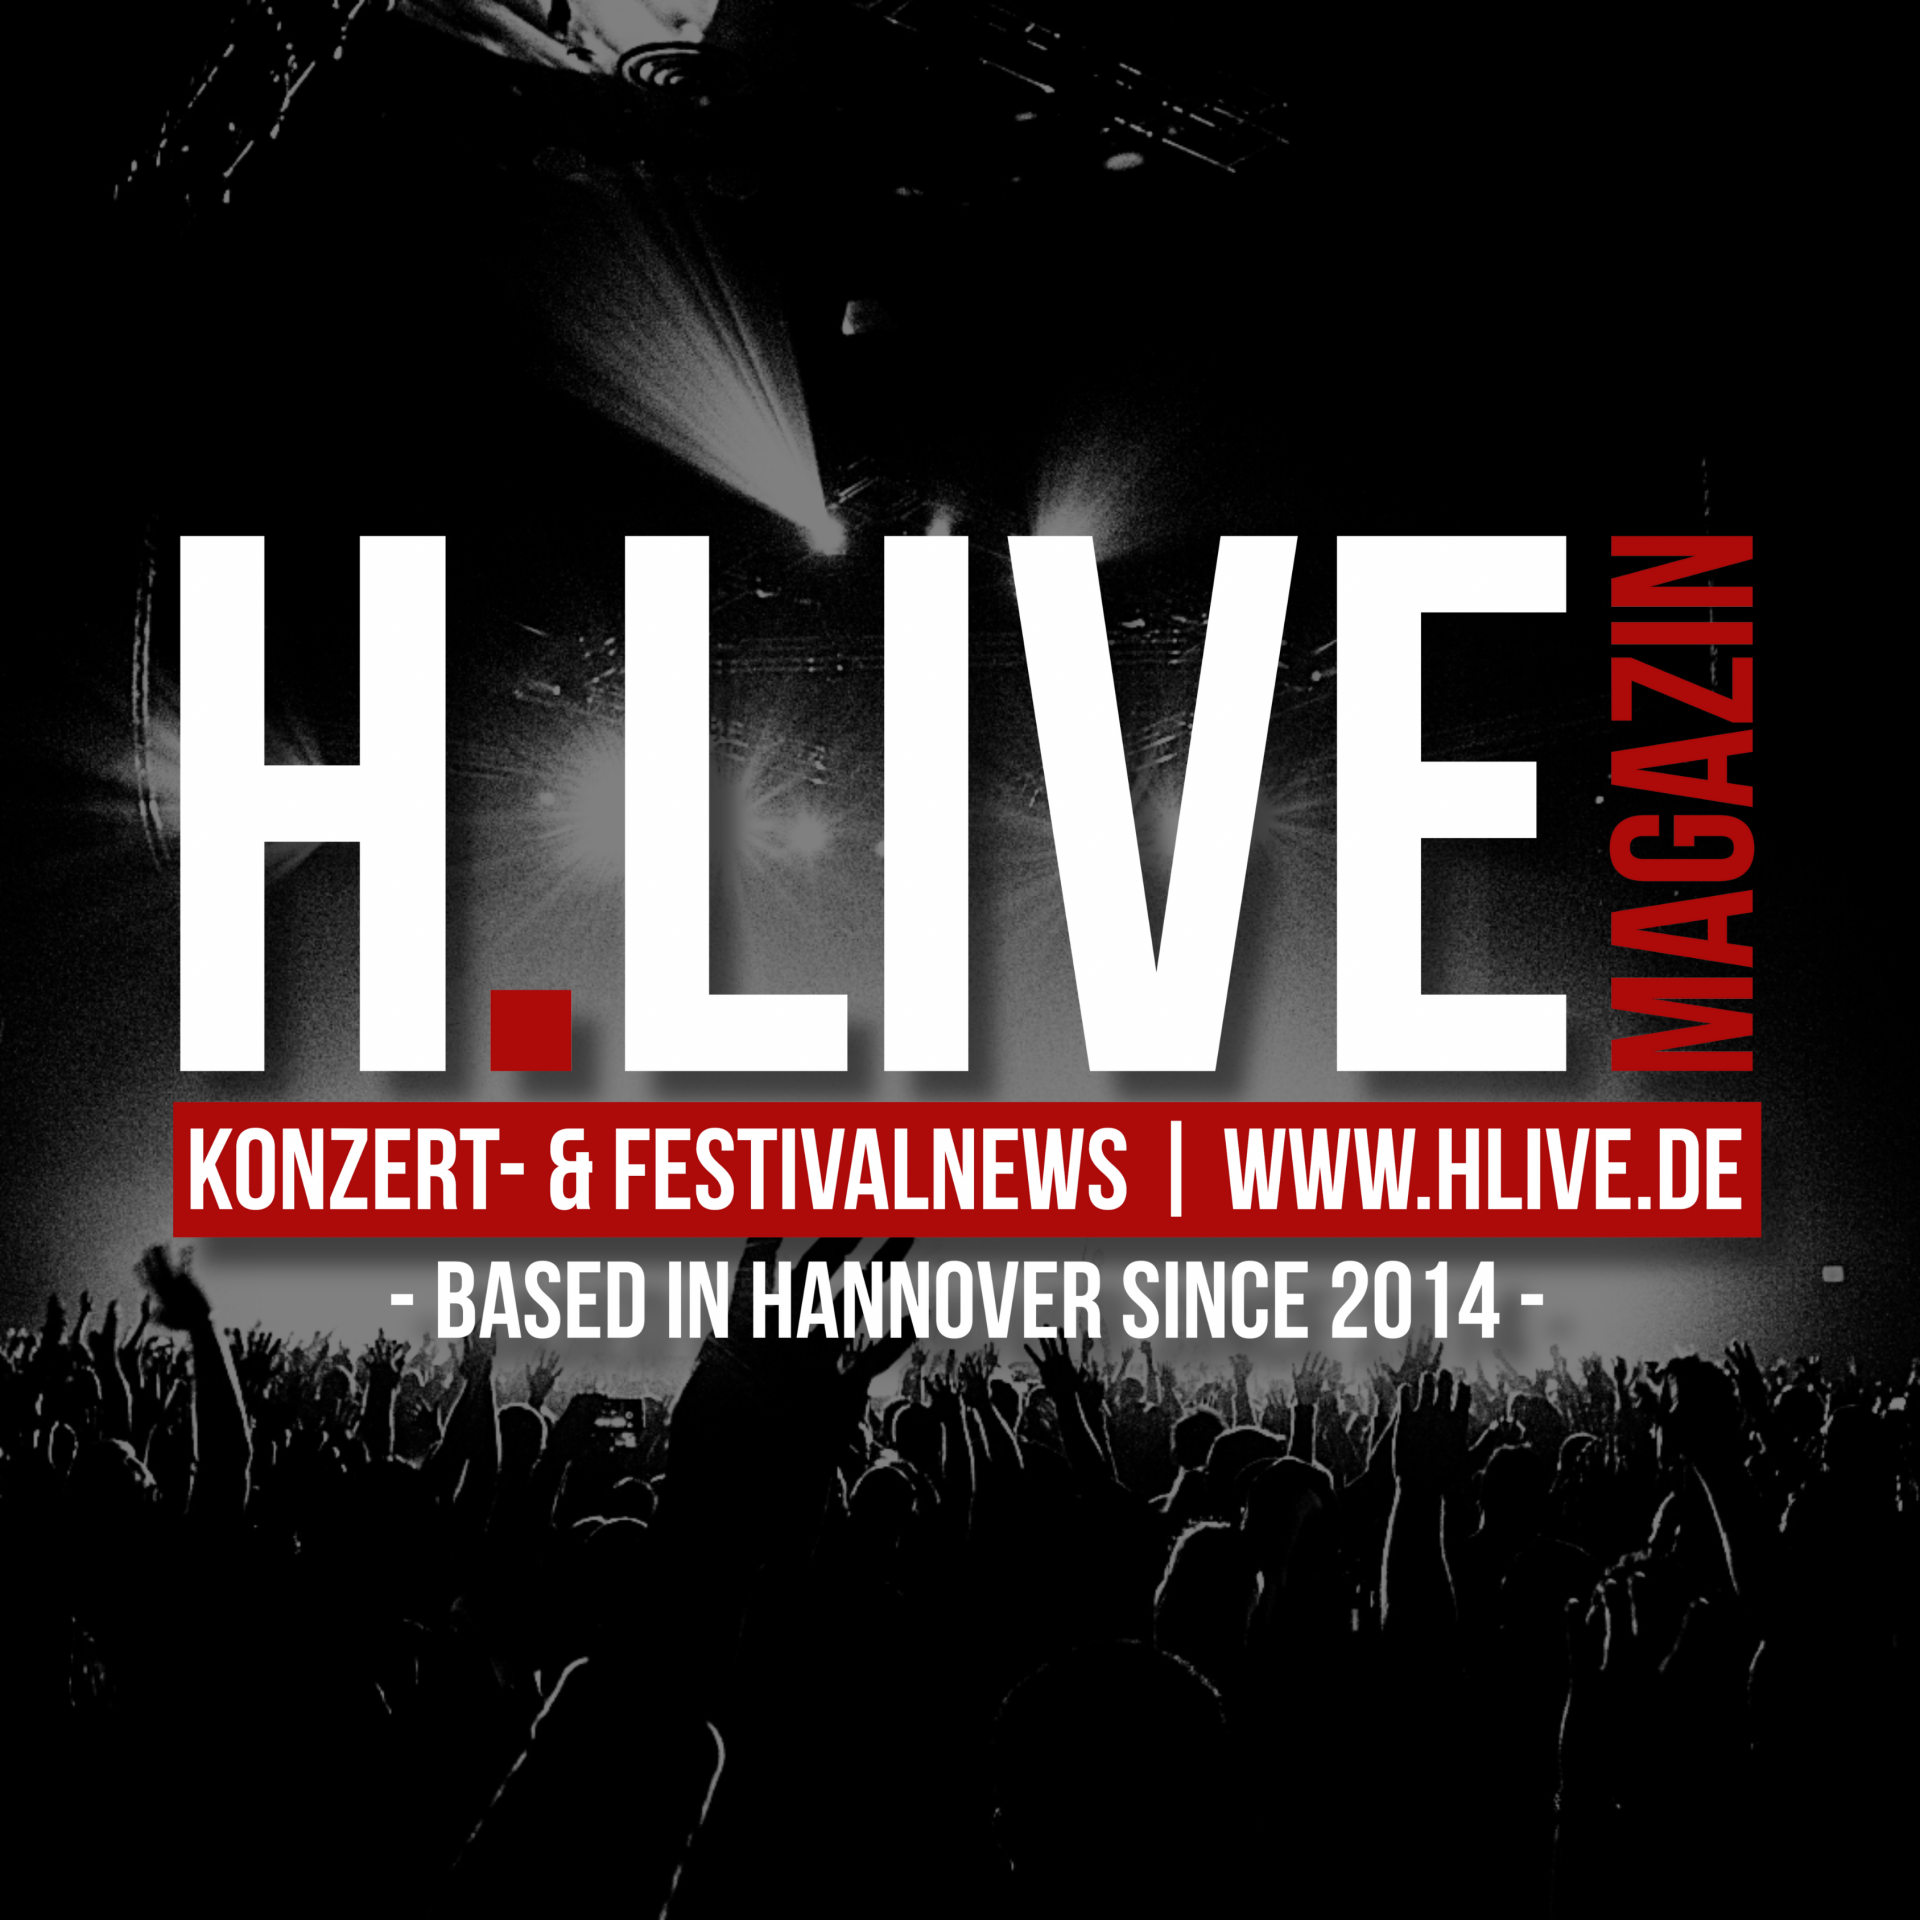 (c) H-live.de